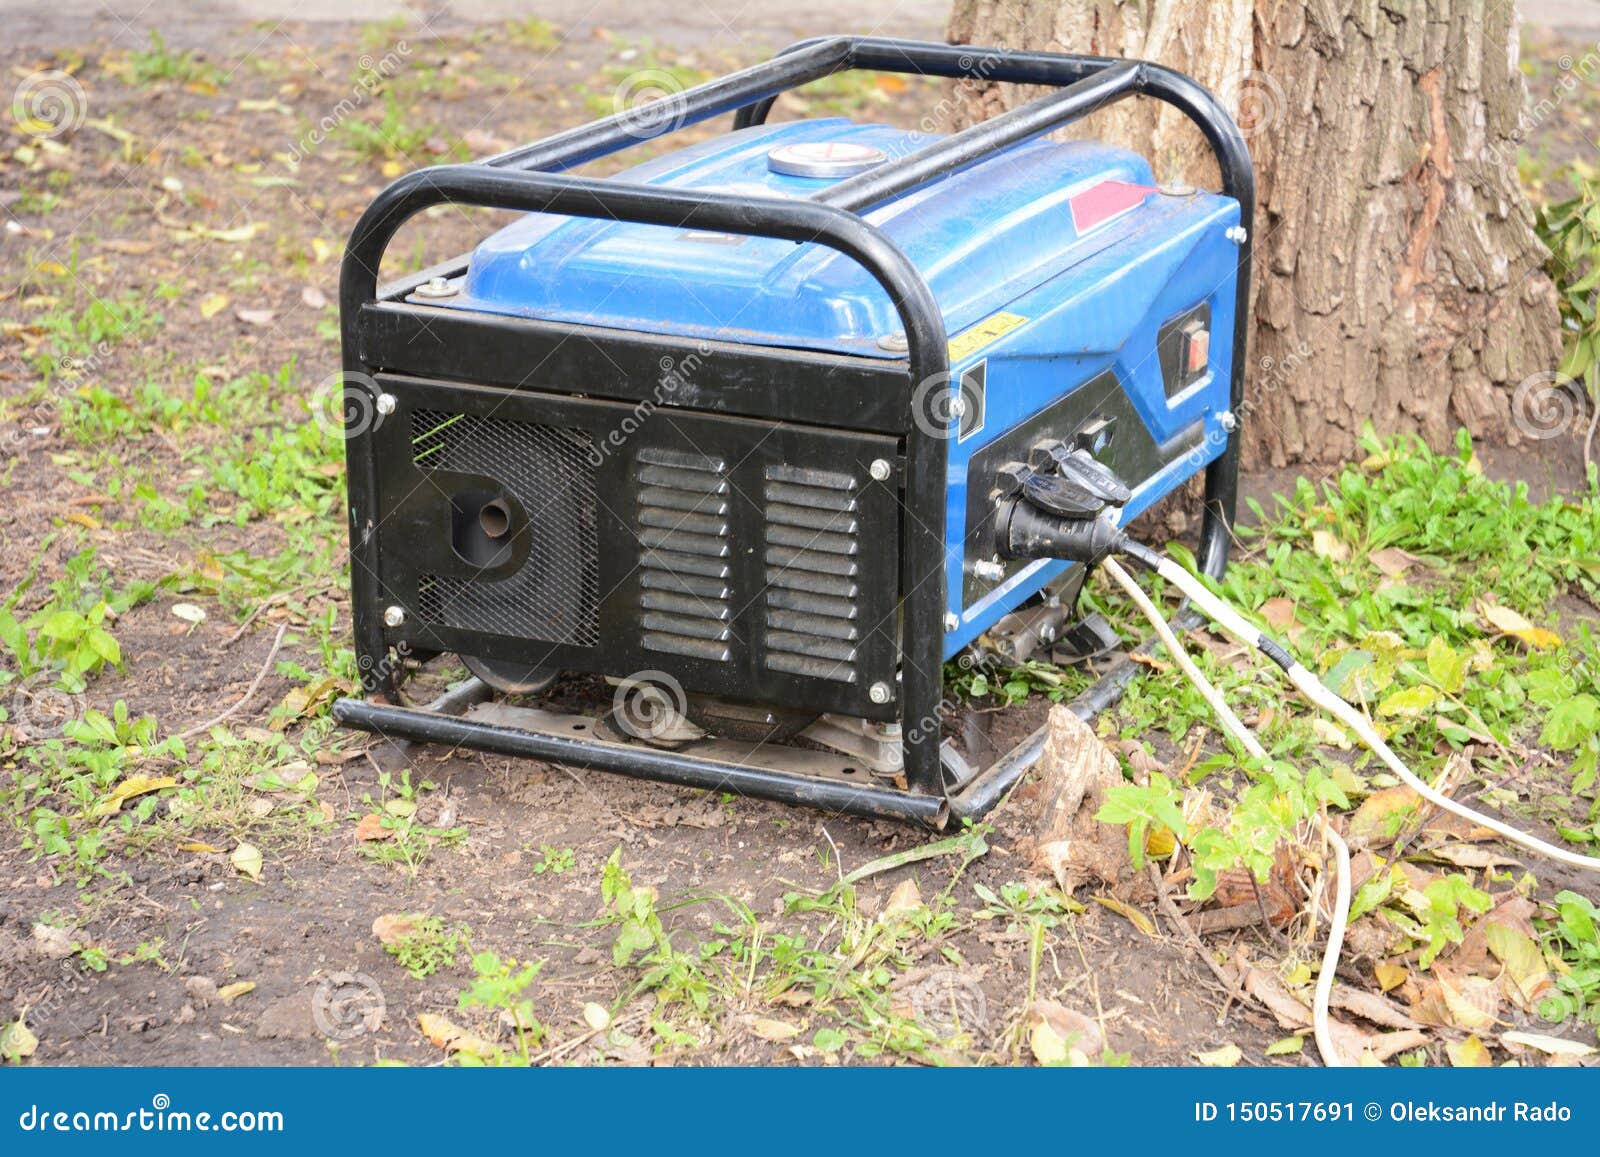 portable generator - outdoor power equipment. mobile backup power generator in the garden